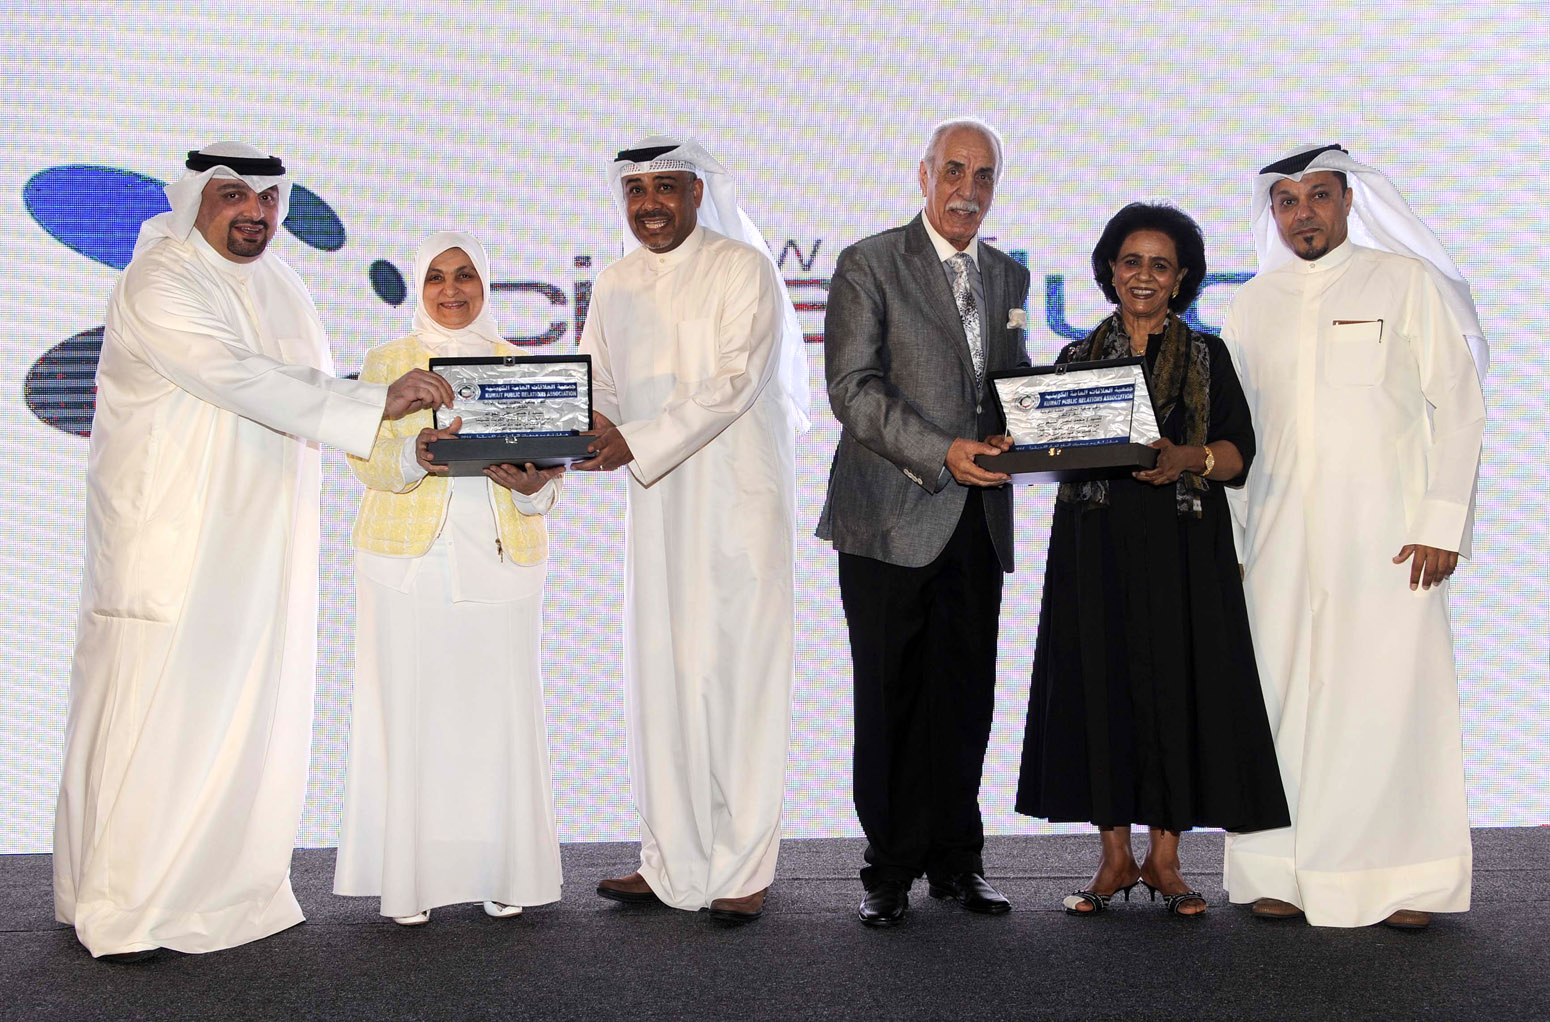 Minister of Social Affairs and Labor Hind Al-Sabeeh, Sheikha Fareeha Al-Ahmad Al-Jaber Al-Sabah during the honoring